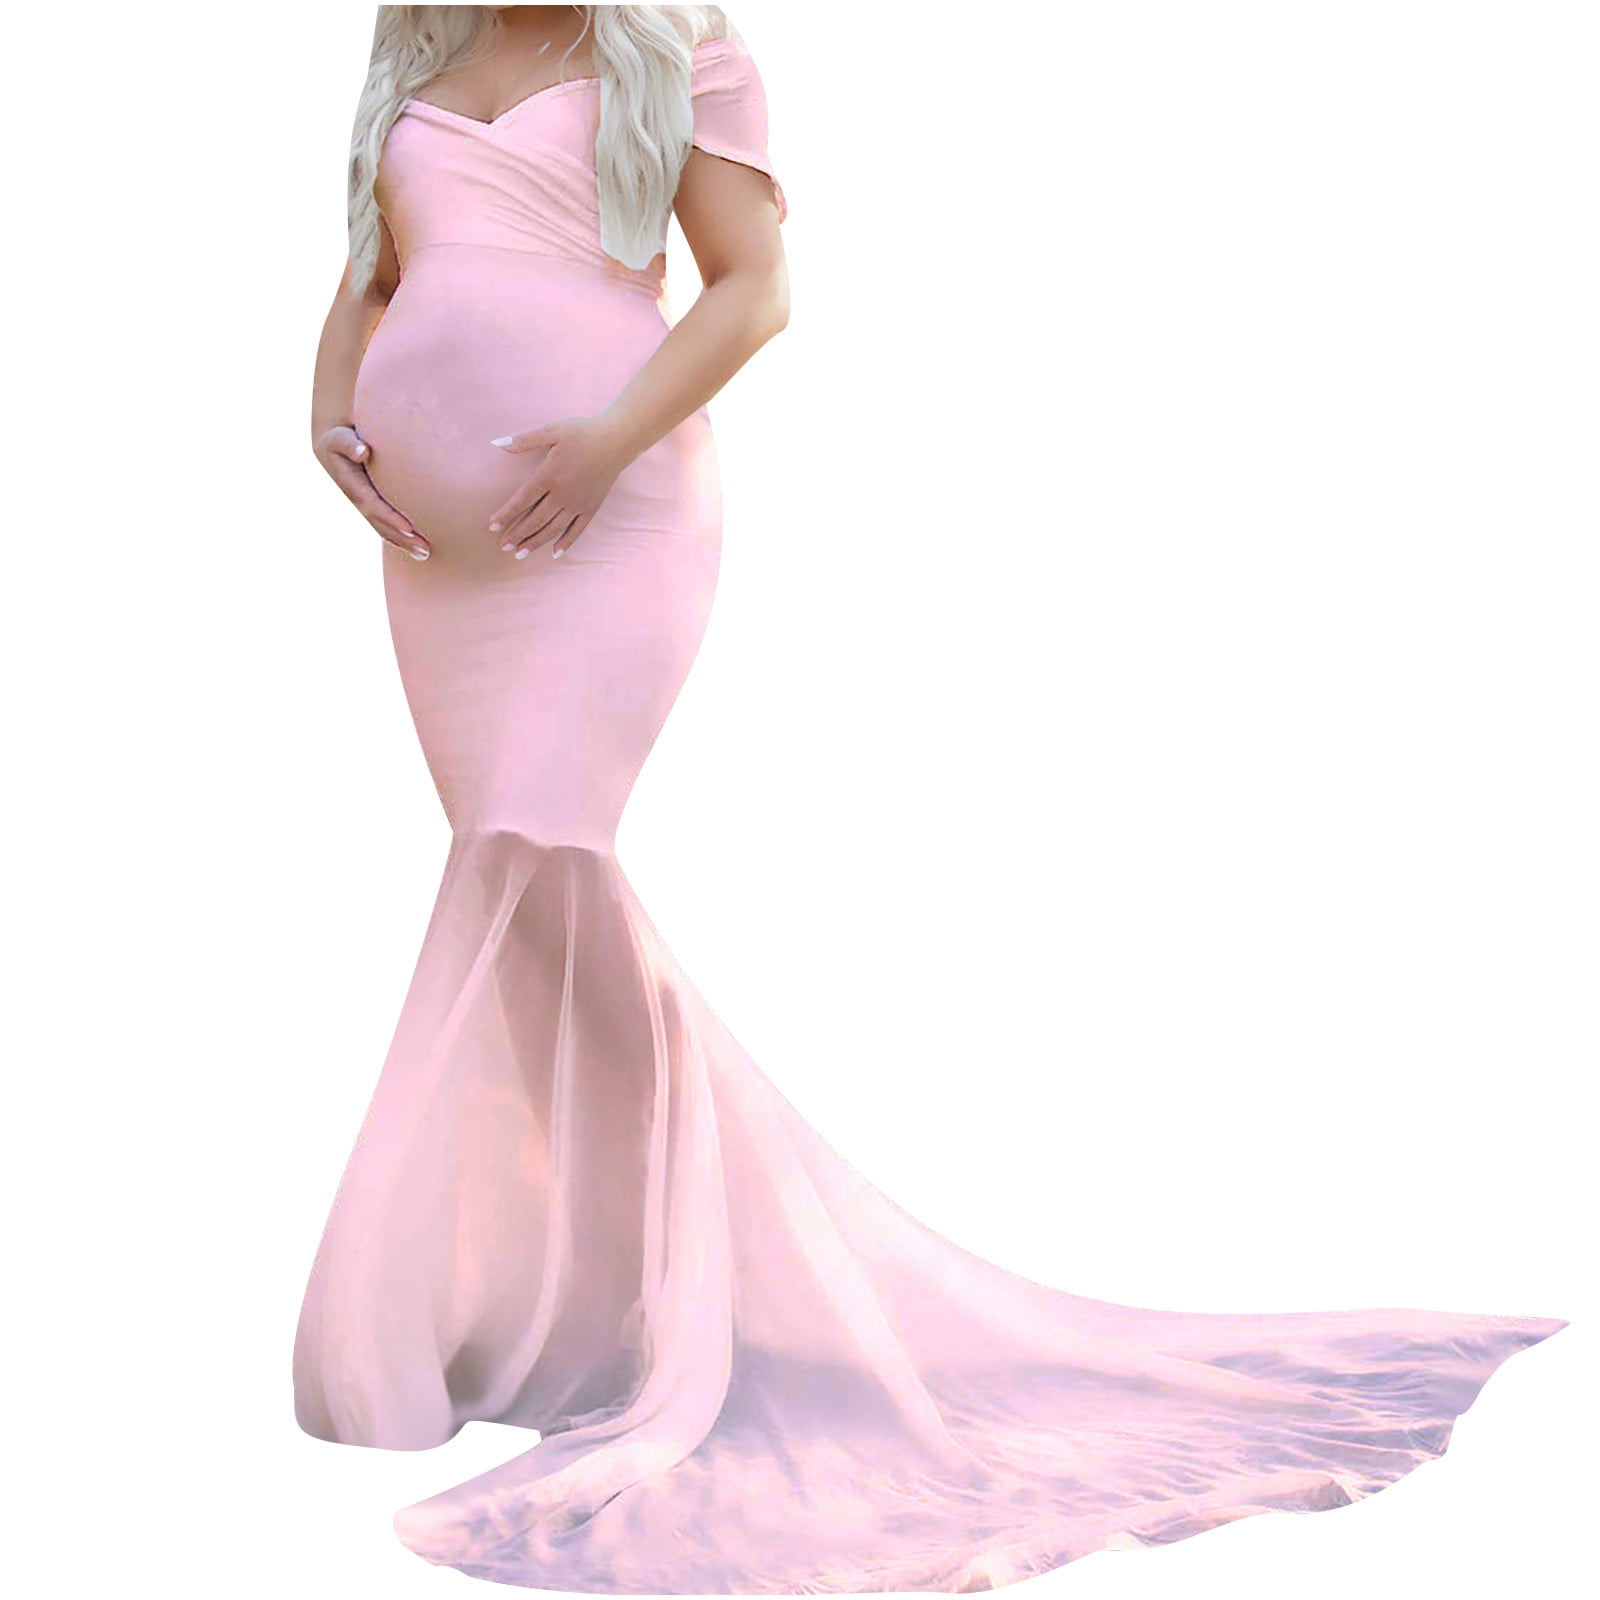 gakvbuo Maternity Dress For Women Plus Size Summer Baby Shower Pregnancy  Dresses For Photoshoot Maternity Clothing Women Pregnants Photography Props  Off Shoulder Sleeveless Solid Dress - Walmart.com